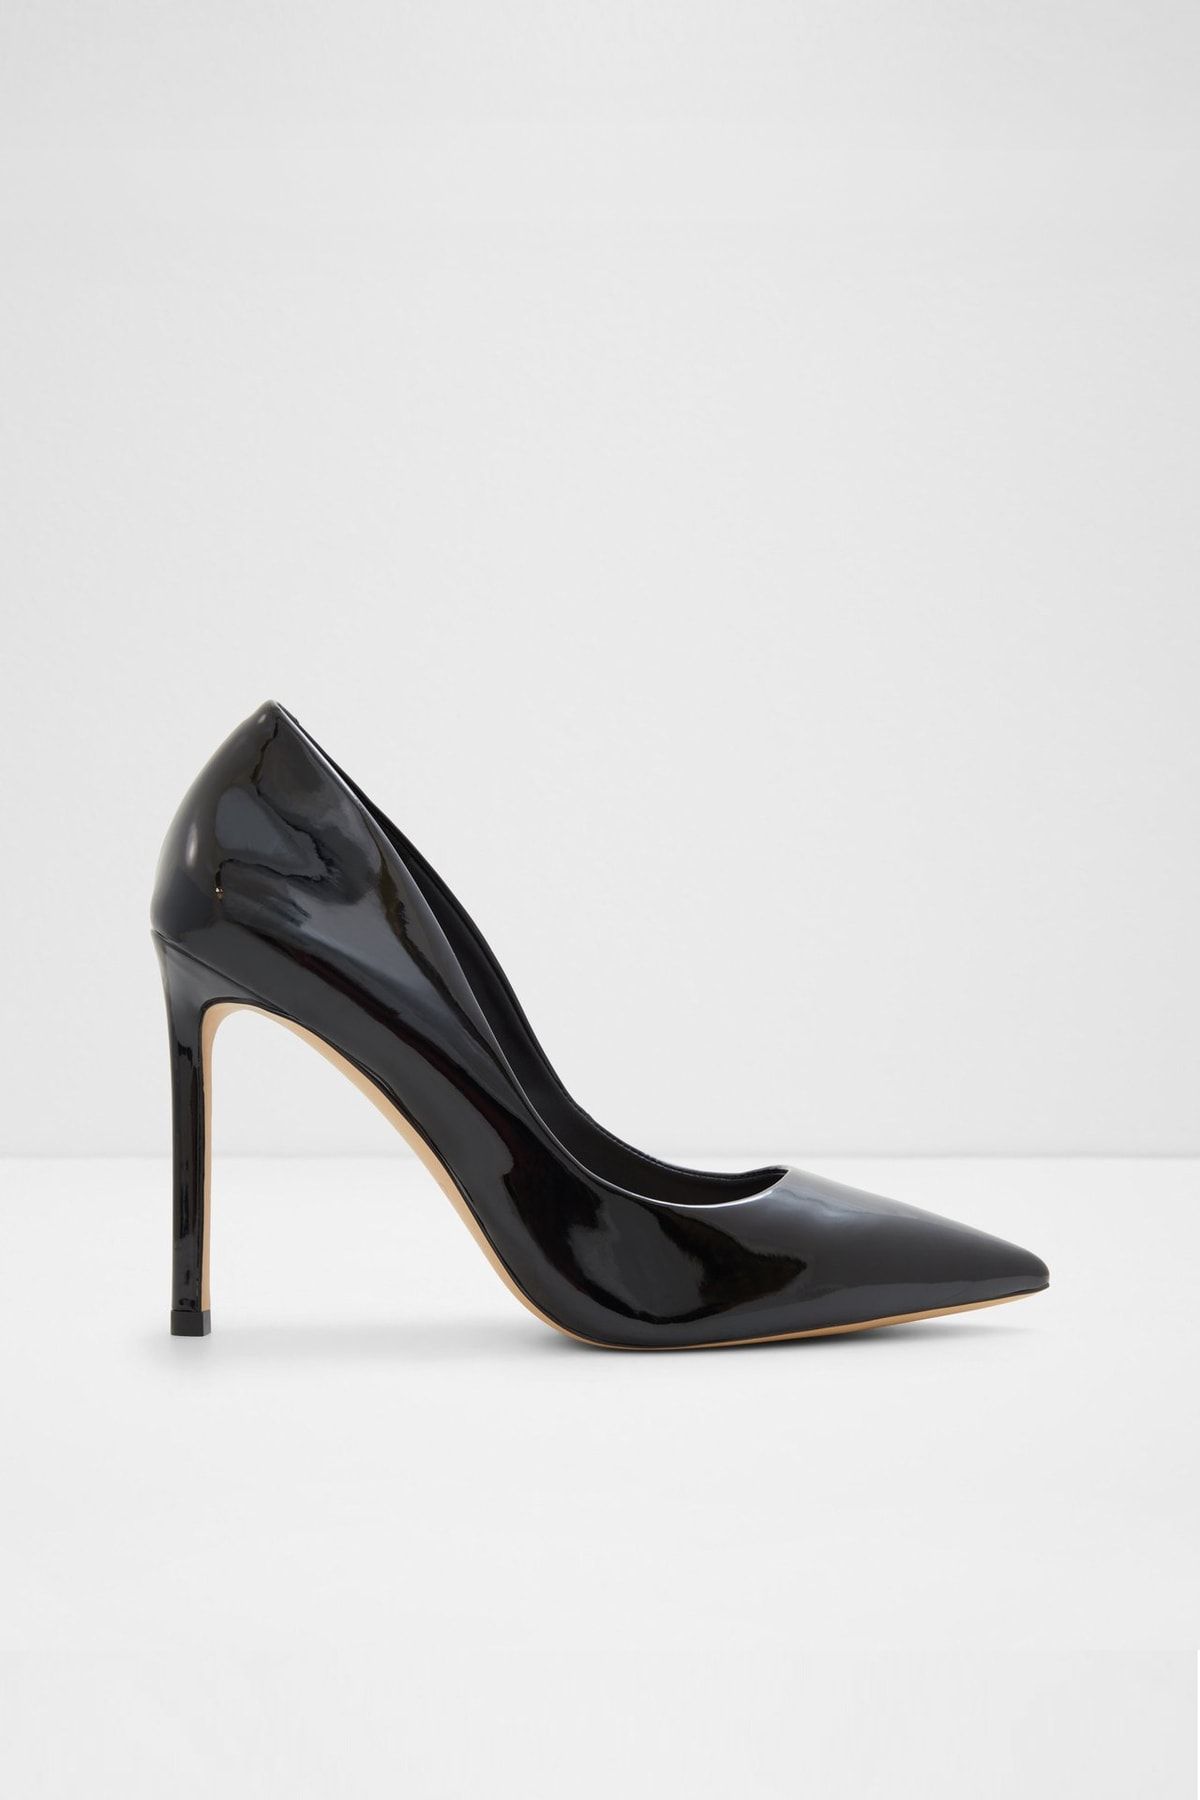 Aldo Stessy2.0 - Siyah Kadın Topuklu Ayakkabı